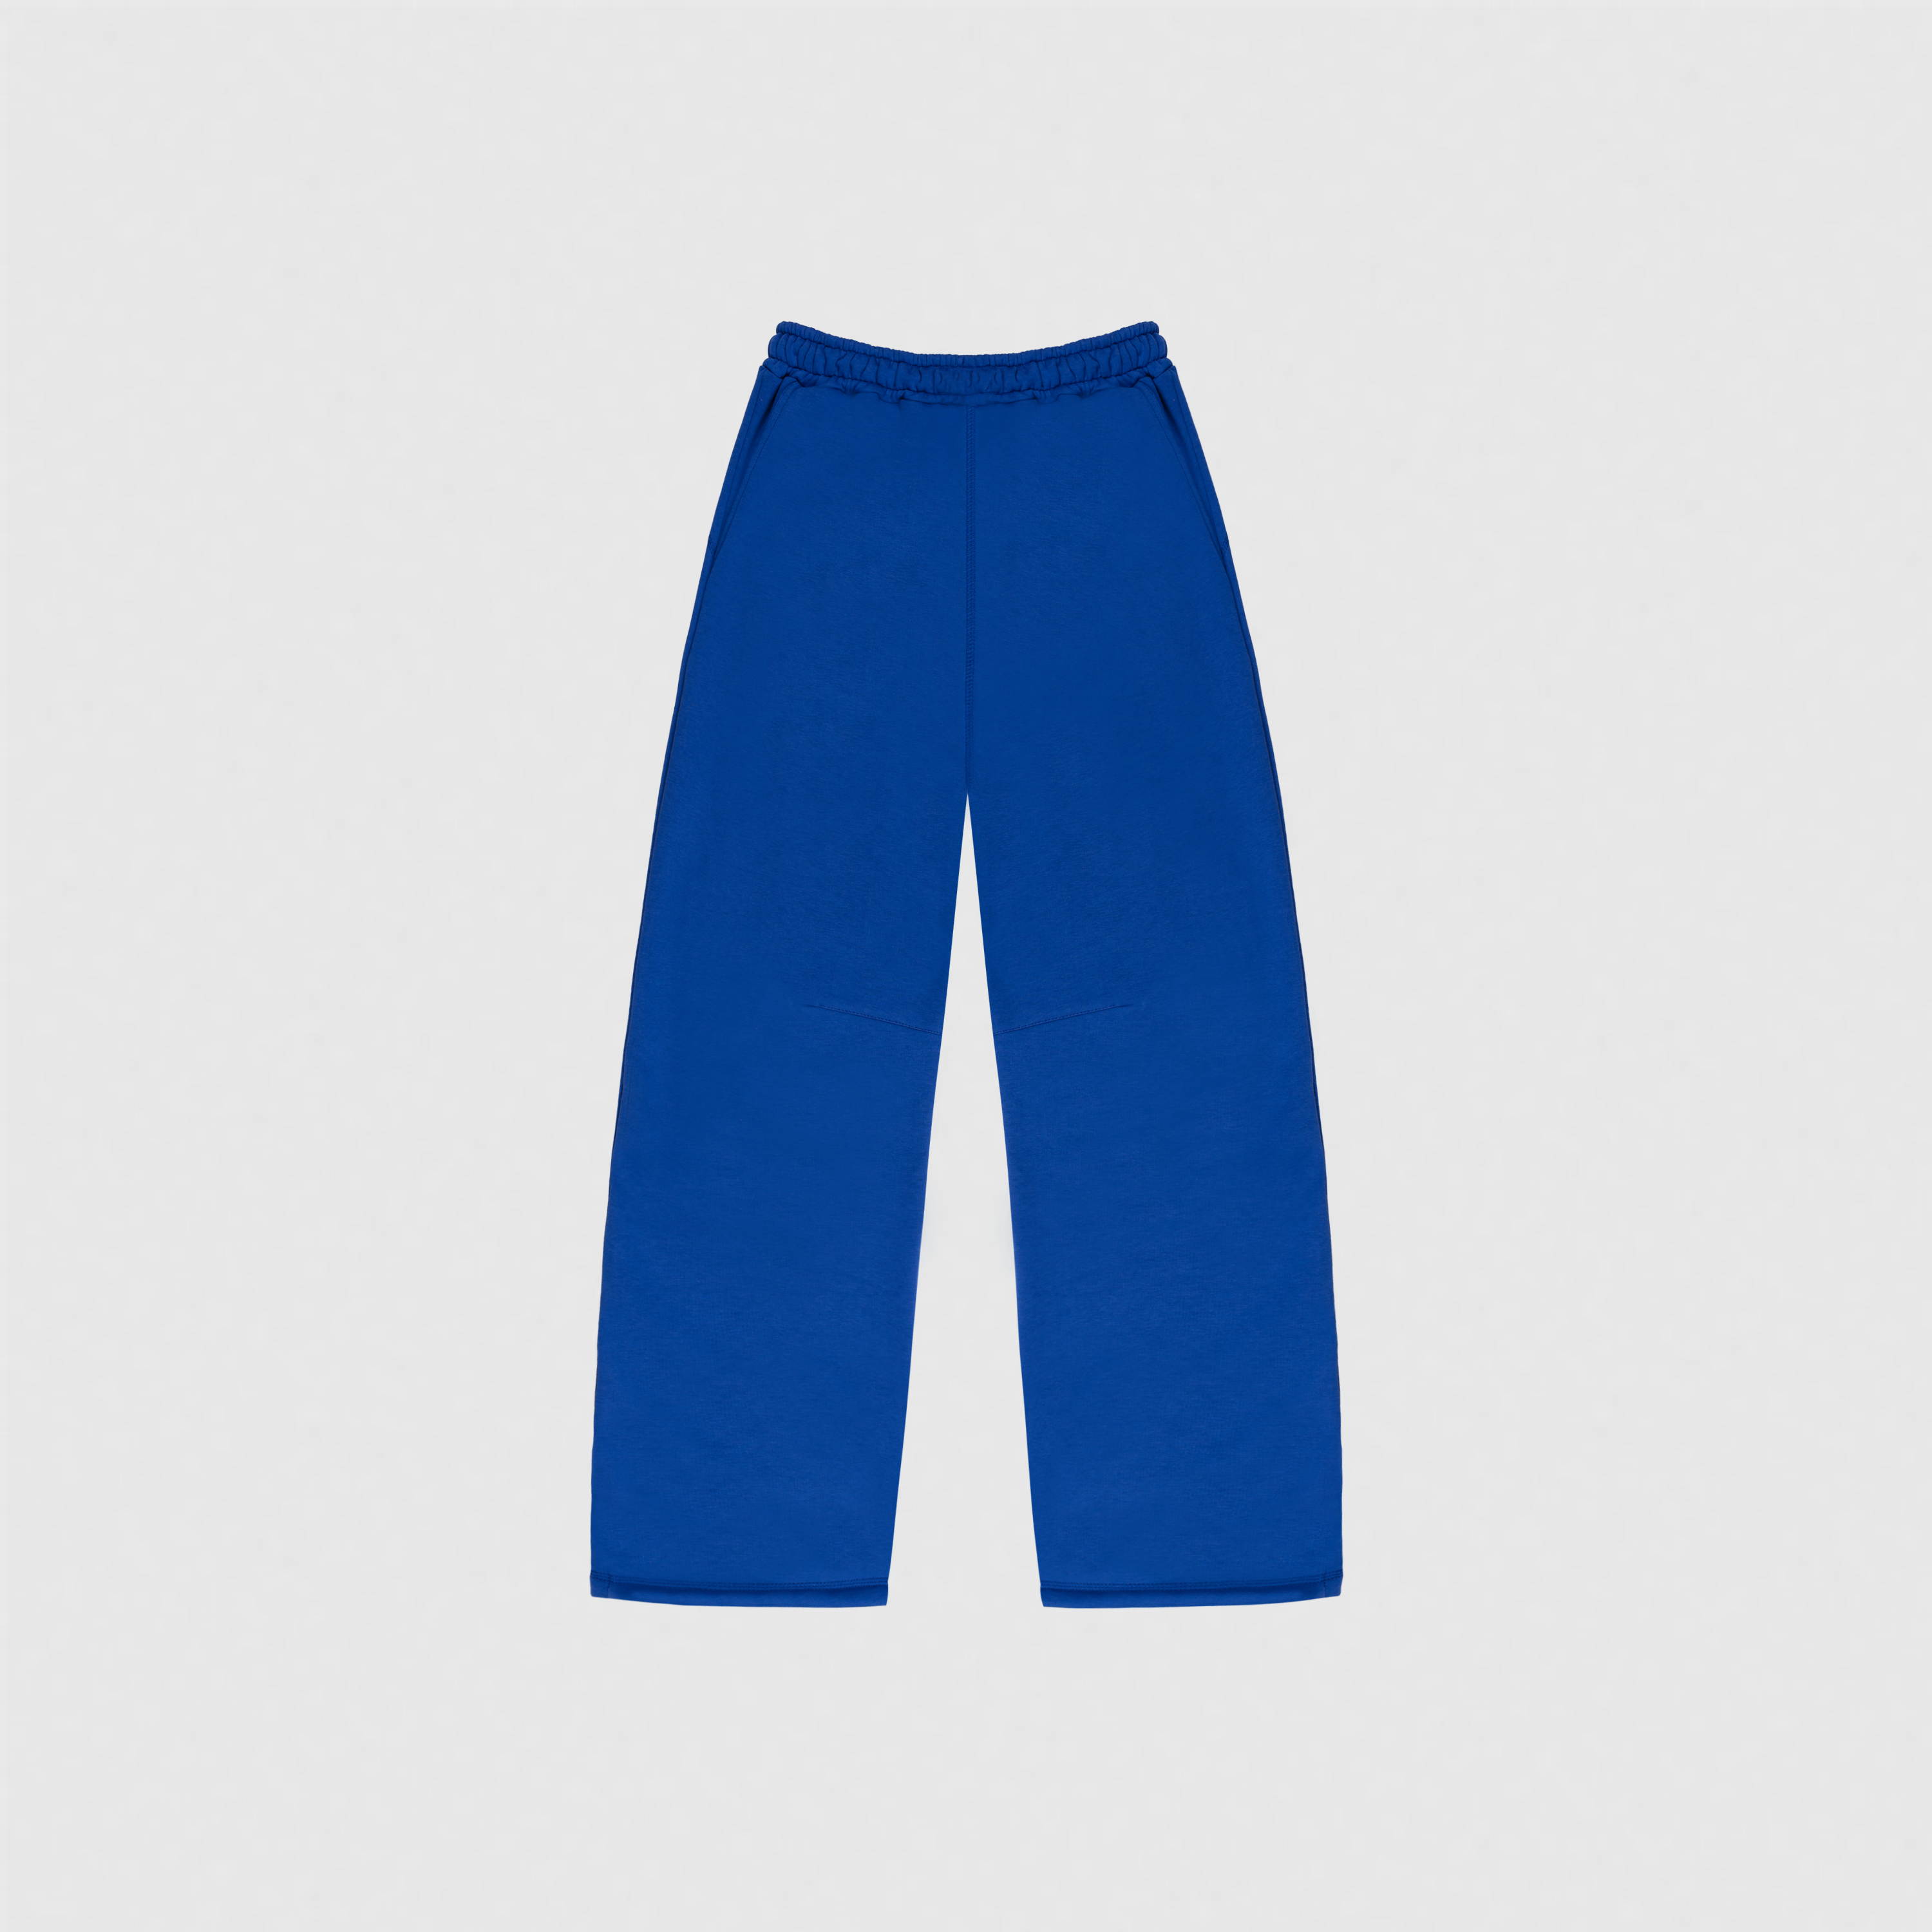 EVERYDAY ROYAL BLUE SWEATPANTS-Sweatpant-Lomalab-XSMALL-SMALL-Royal Blue-Lomalab